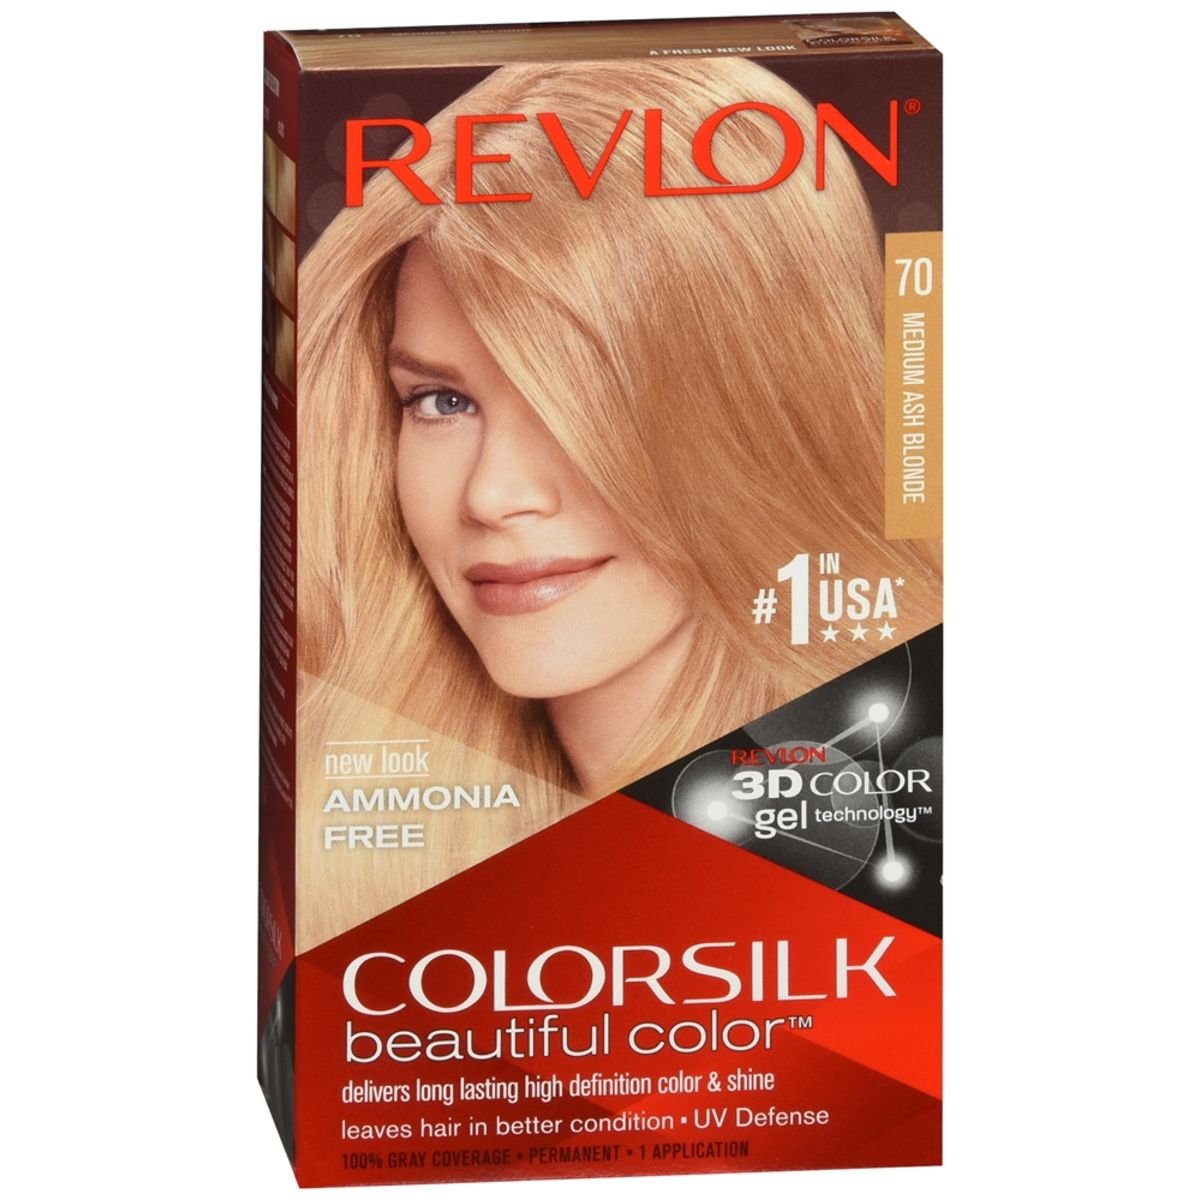 Revlon colorsilk strawberry blonde